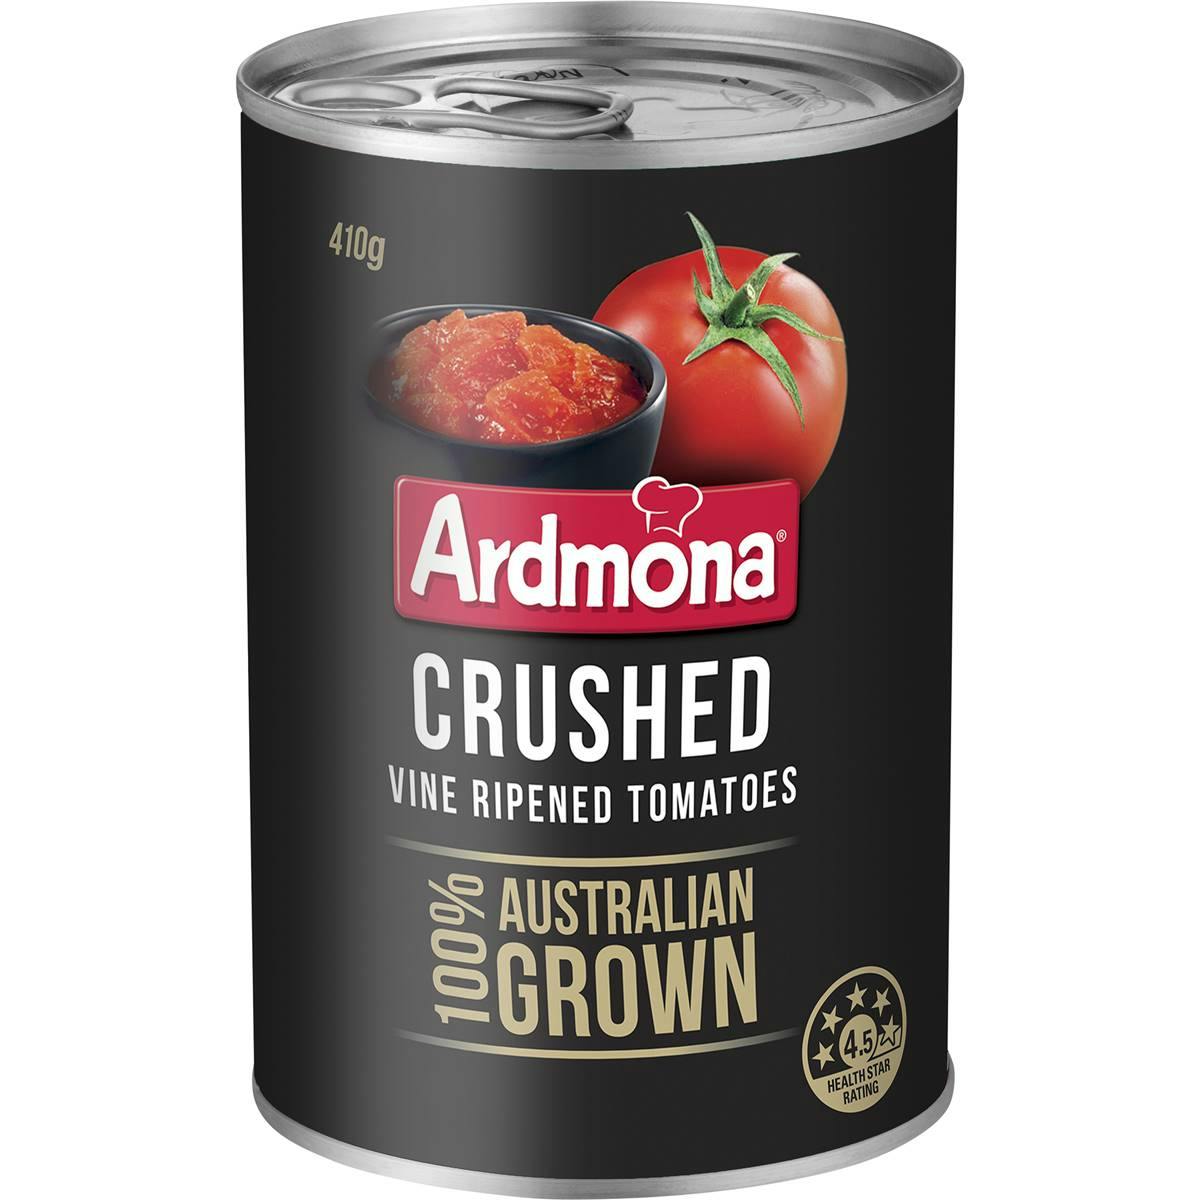 Ardmona Crushed Vine Ripened Tomatoes